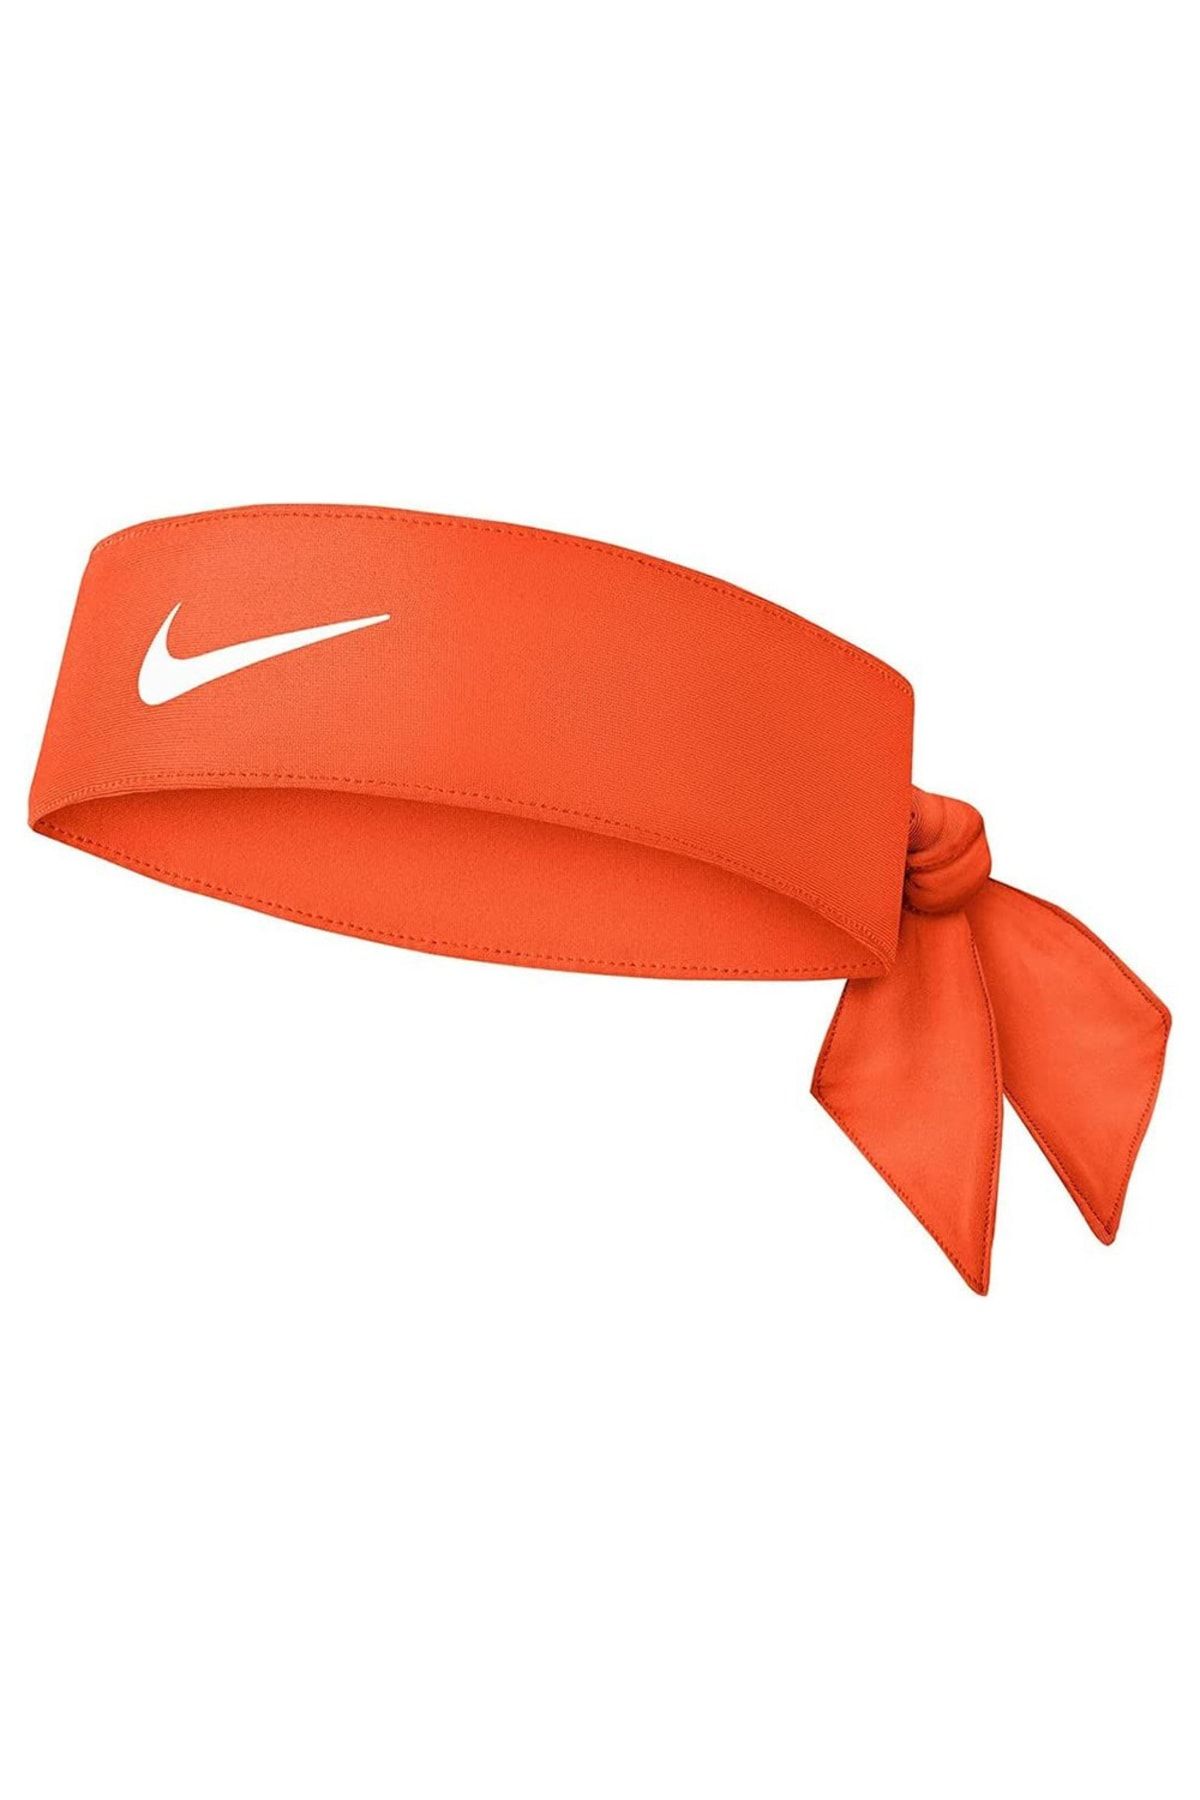 Nike Dri Fit Head Tie Bandana Tenisçi Kafa Bandı Turuncu